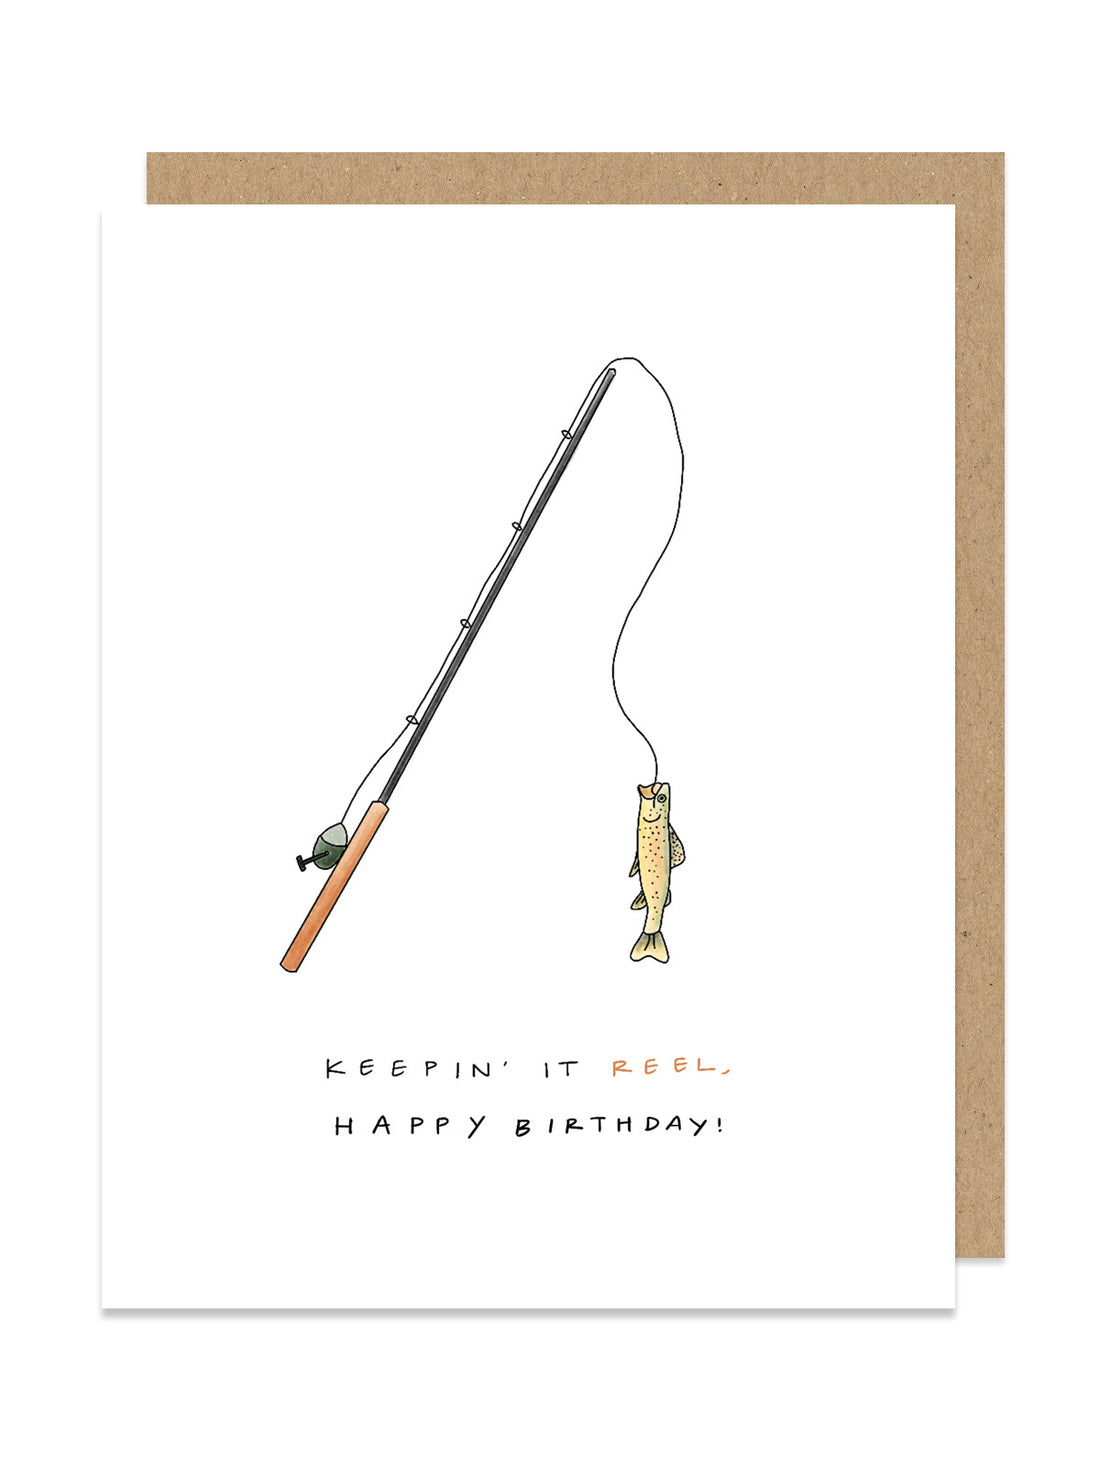 Fishing Happy Birthday Card